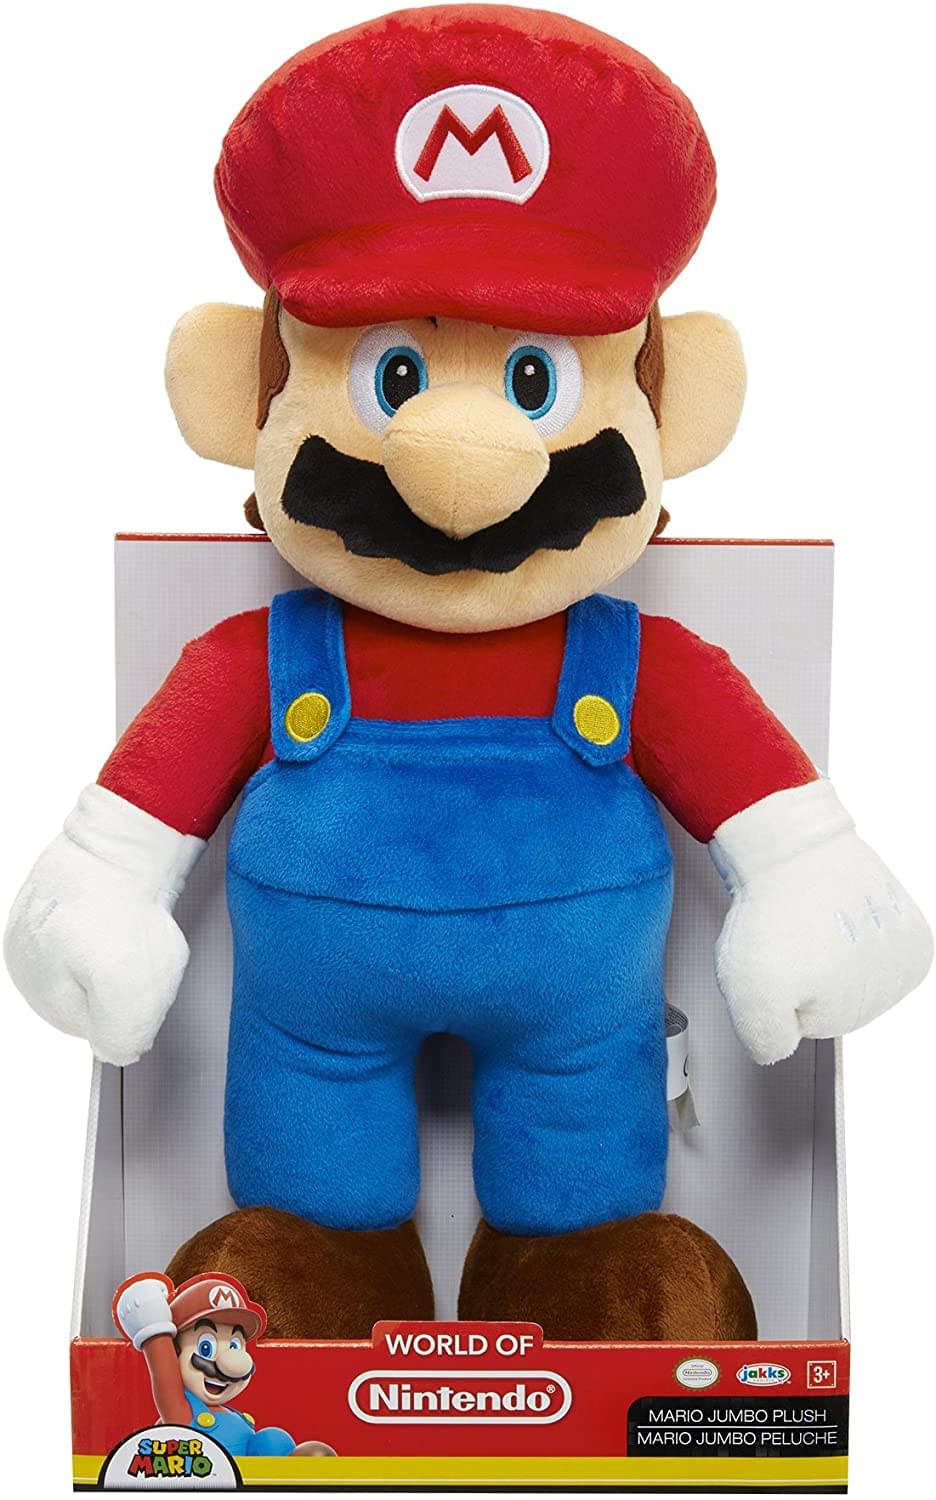 Super Mario World of Nintendo Jumbo 20 Inch Plush Mario